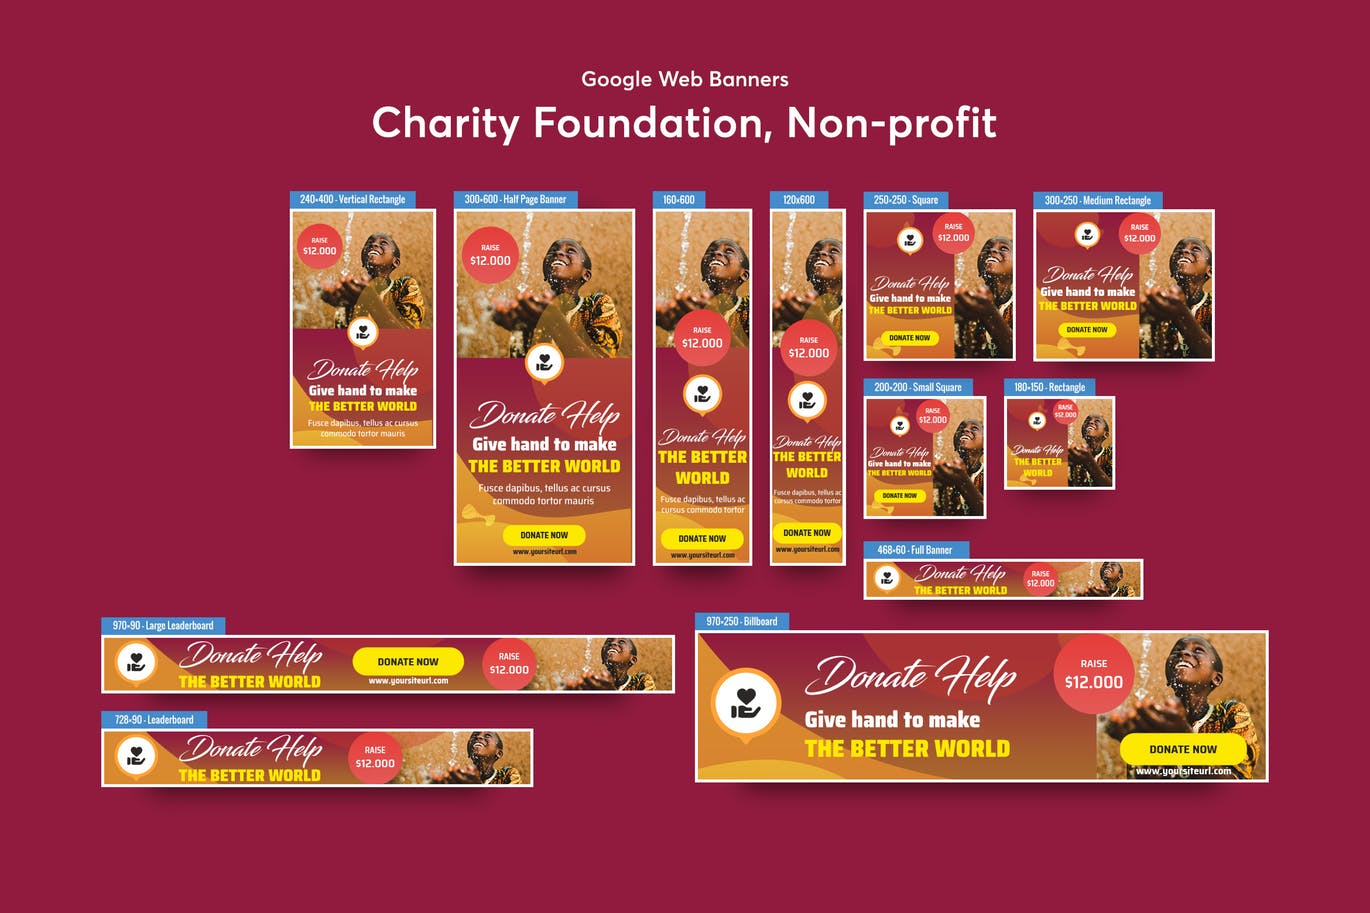 慈善基金会非营利组织推广Banner素材库精选广告模板 Charity Foundation, Non-profit Banners Ad插图